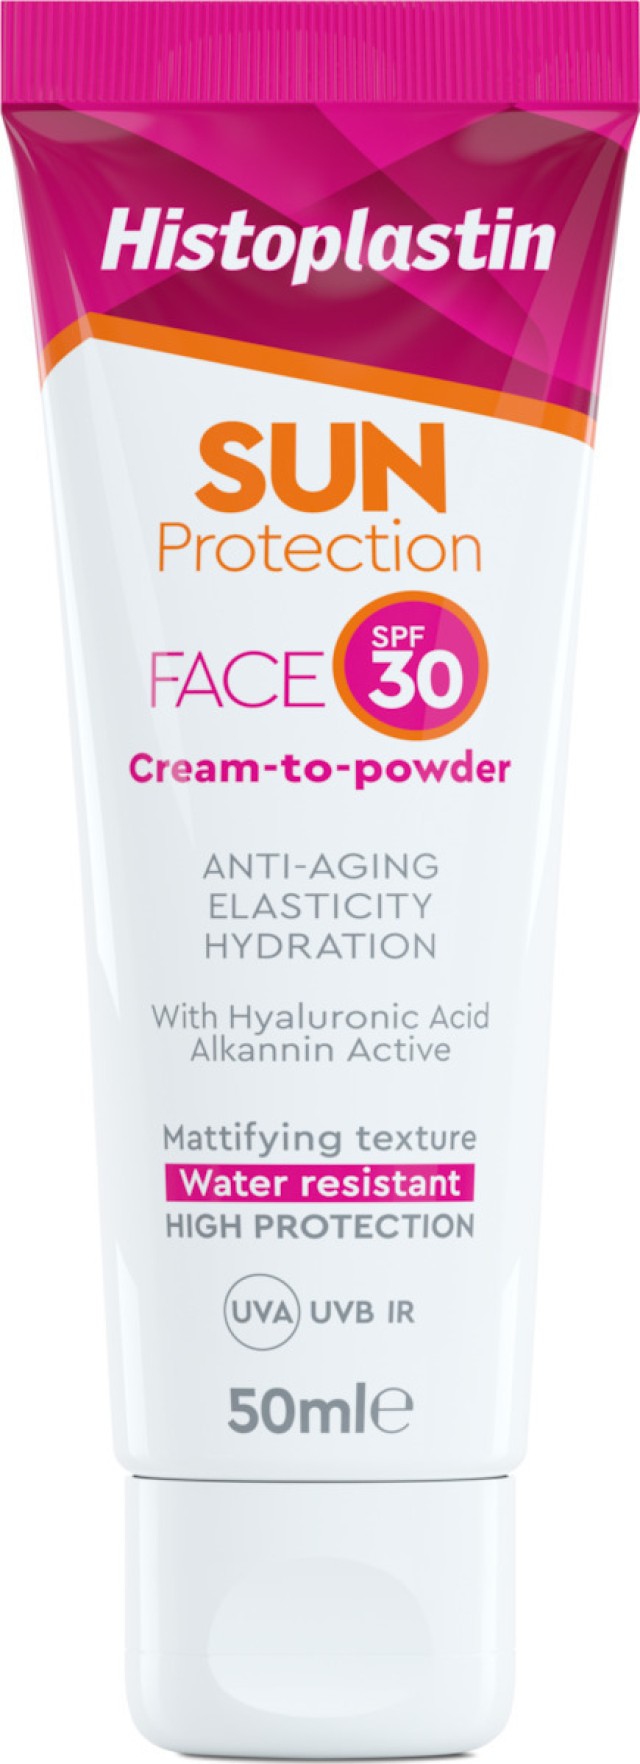 Histoplastin Sun Protection Face Cream to Powder SPF30, 50ml